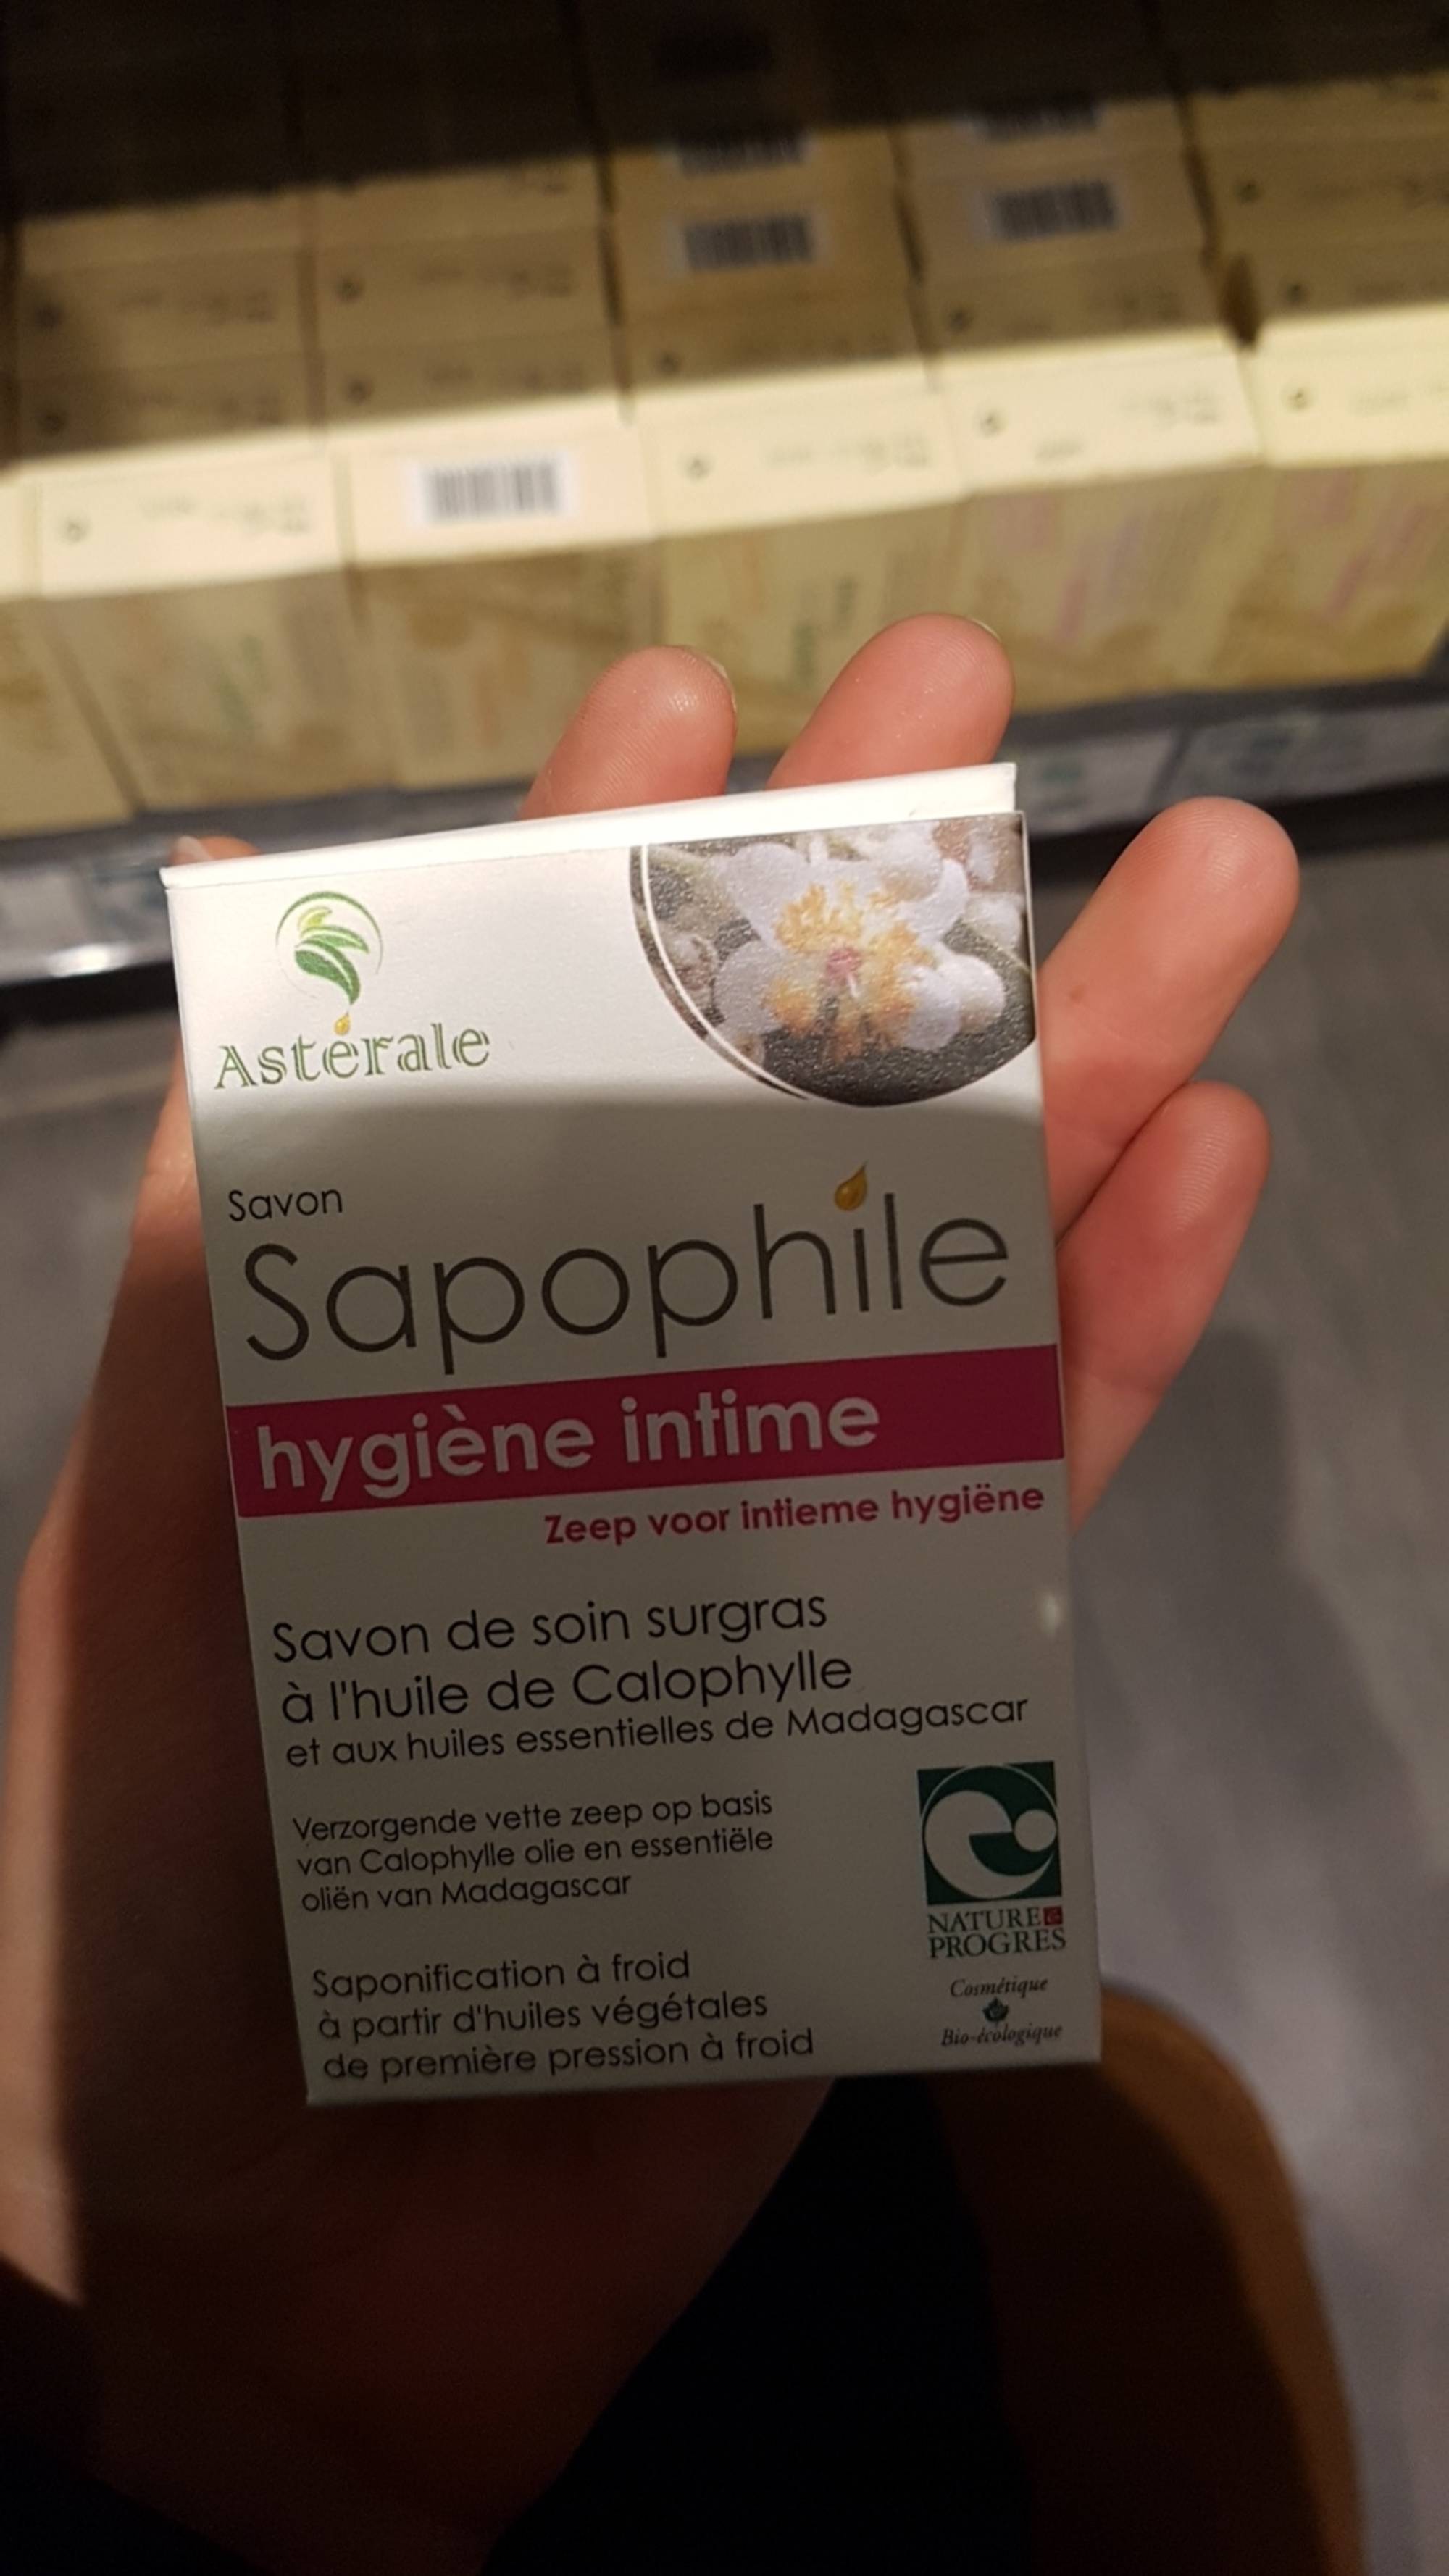 ASTÉRALE - Savon Sapophile hygiène intime